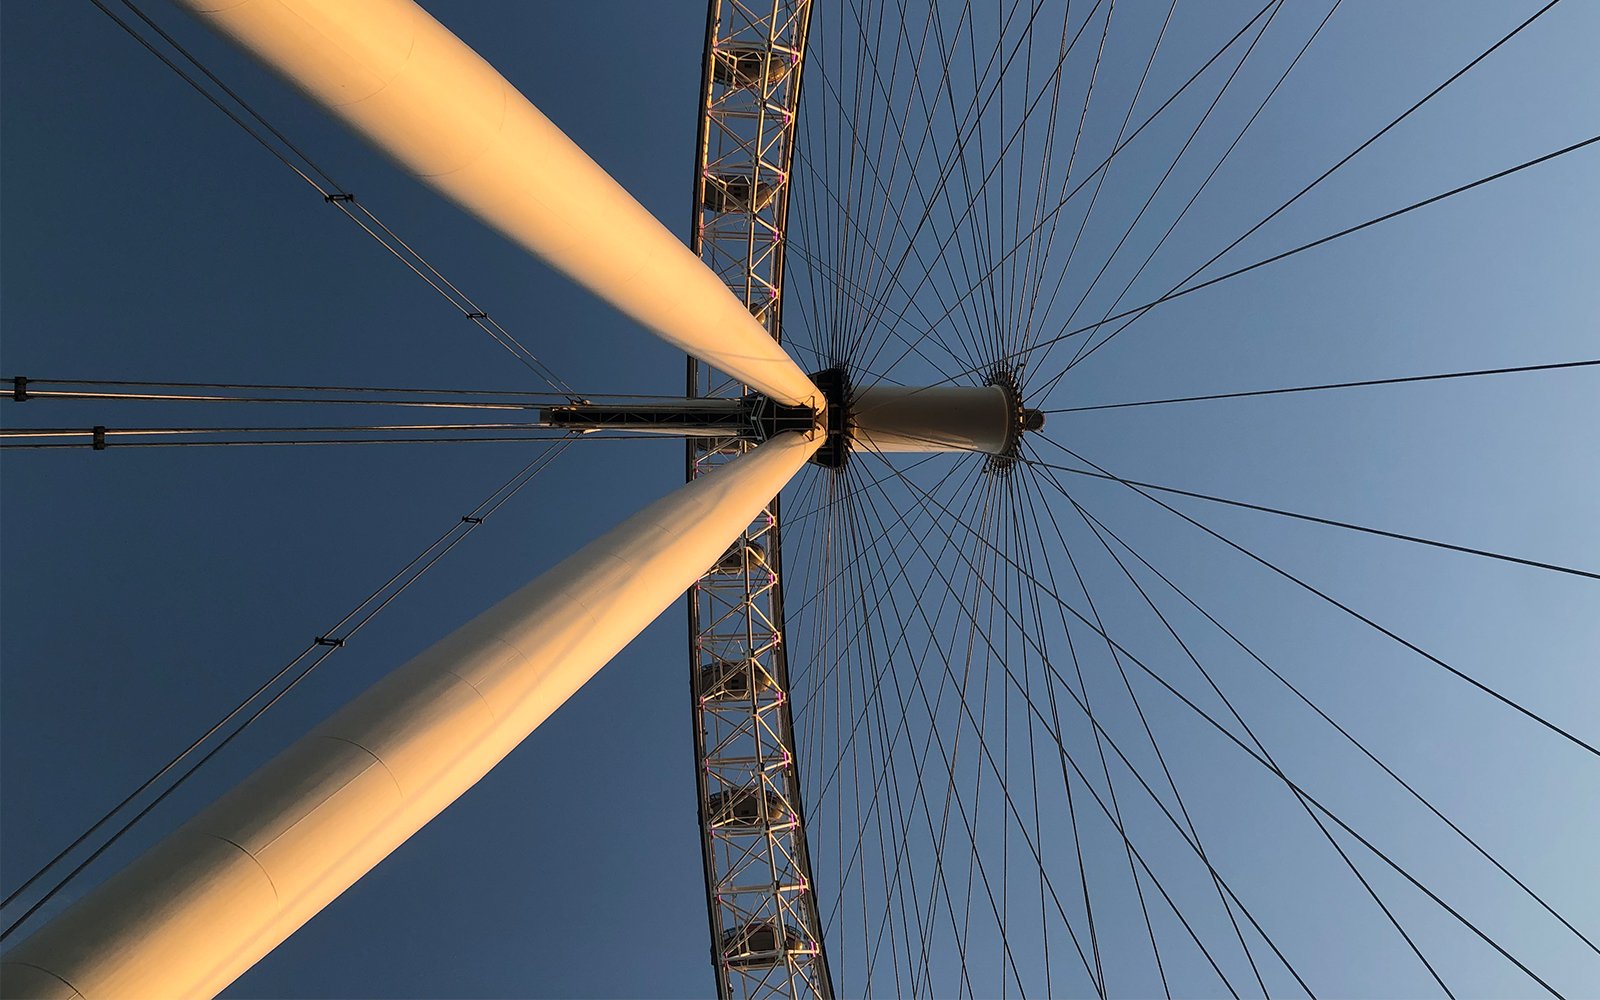 View of Ferris Wheel from below